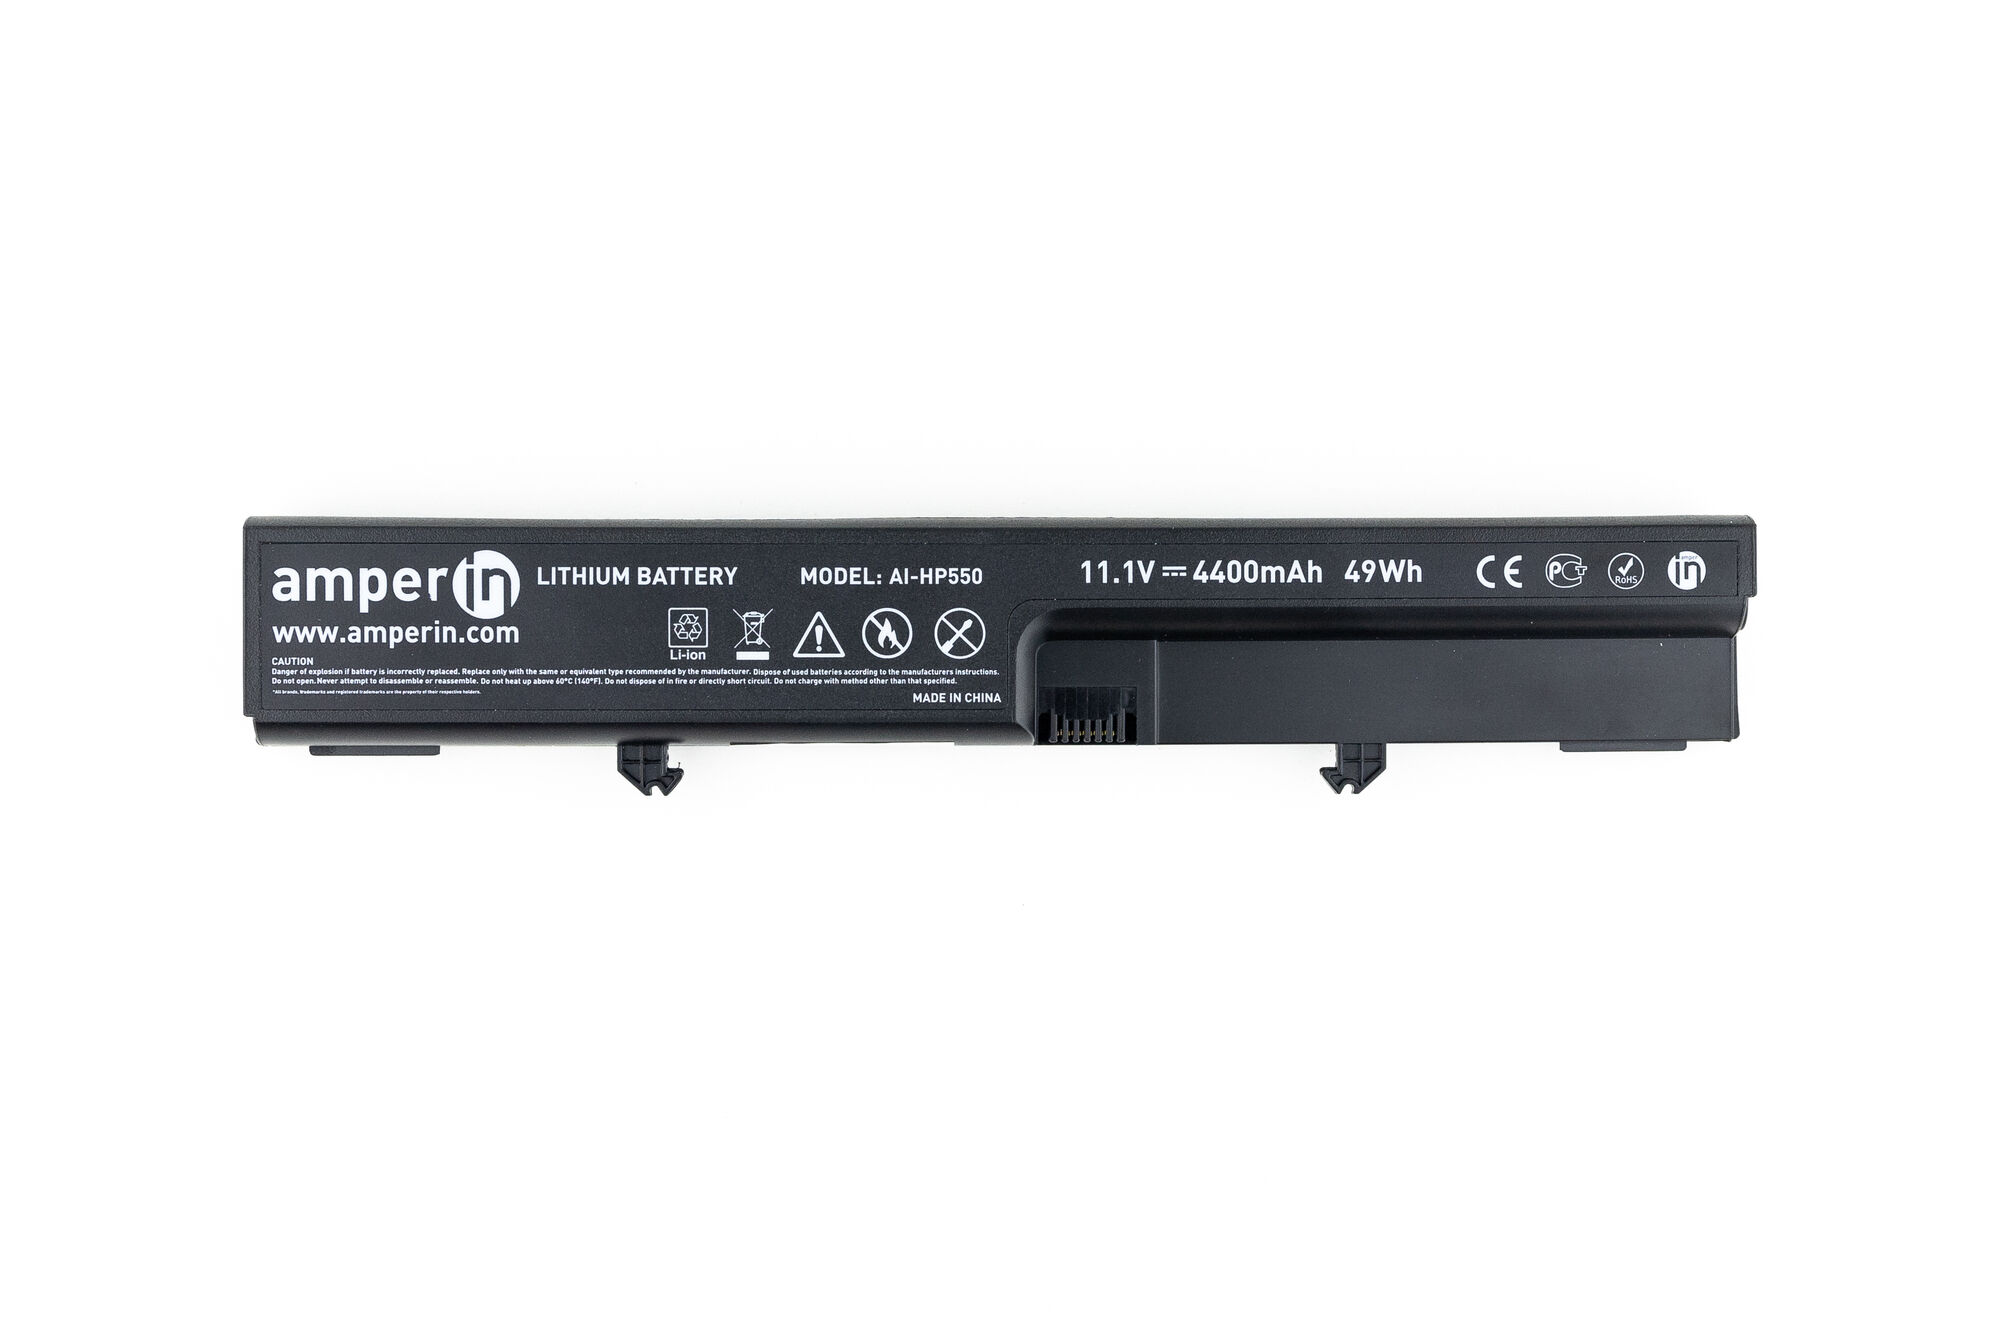 Аккумулятор для HP Amperin 550 (11.1V 4400mAh) p/n: AI-HP550